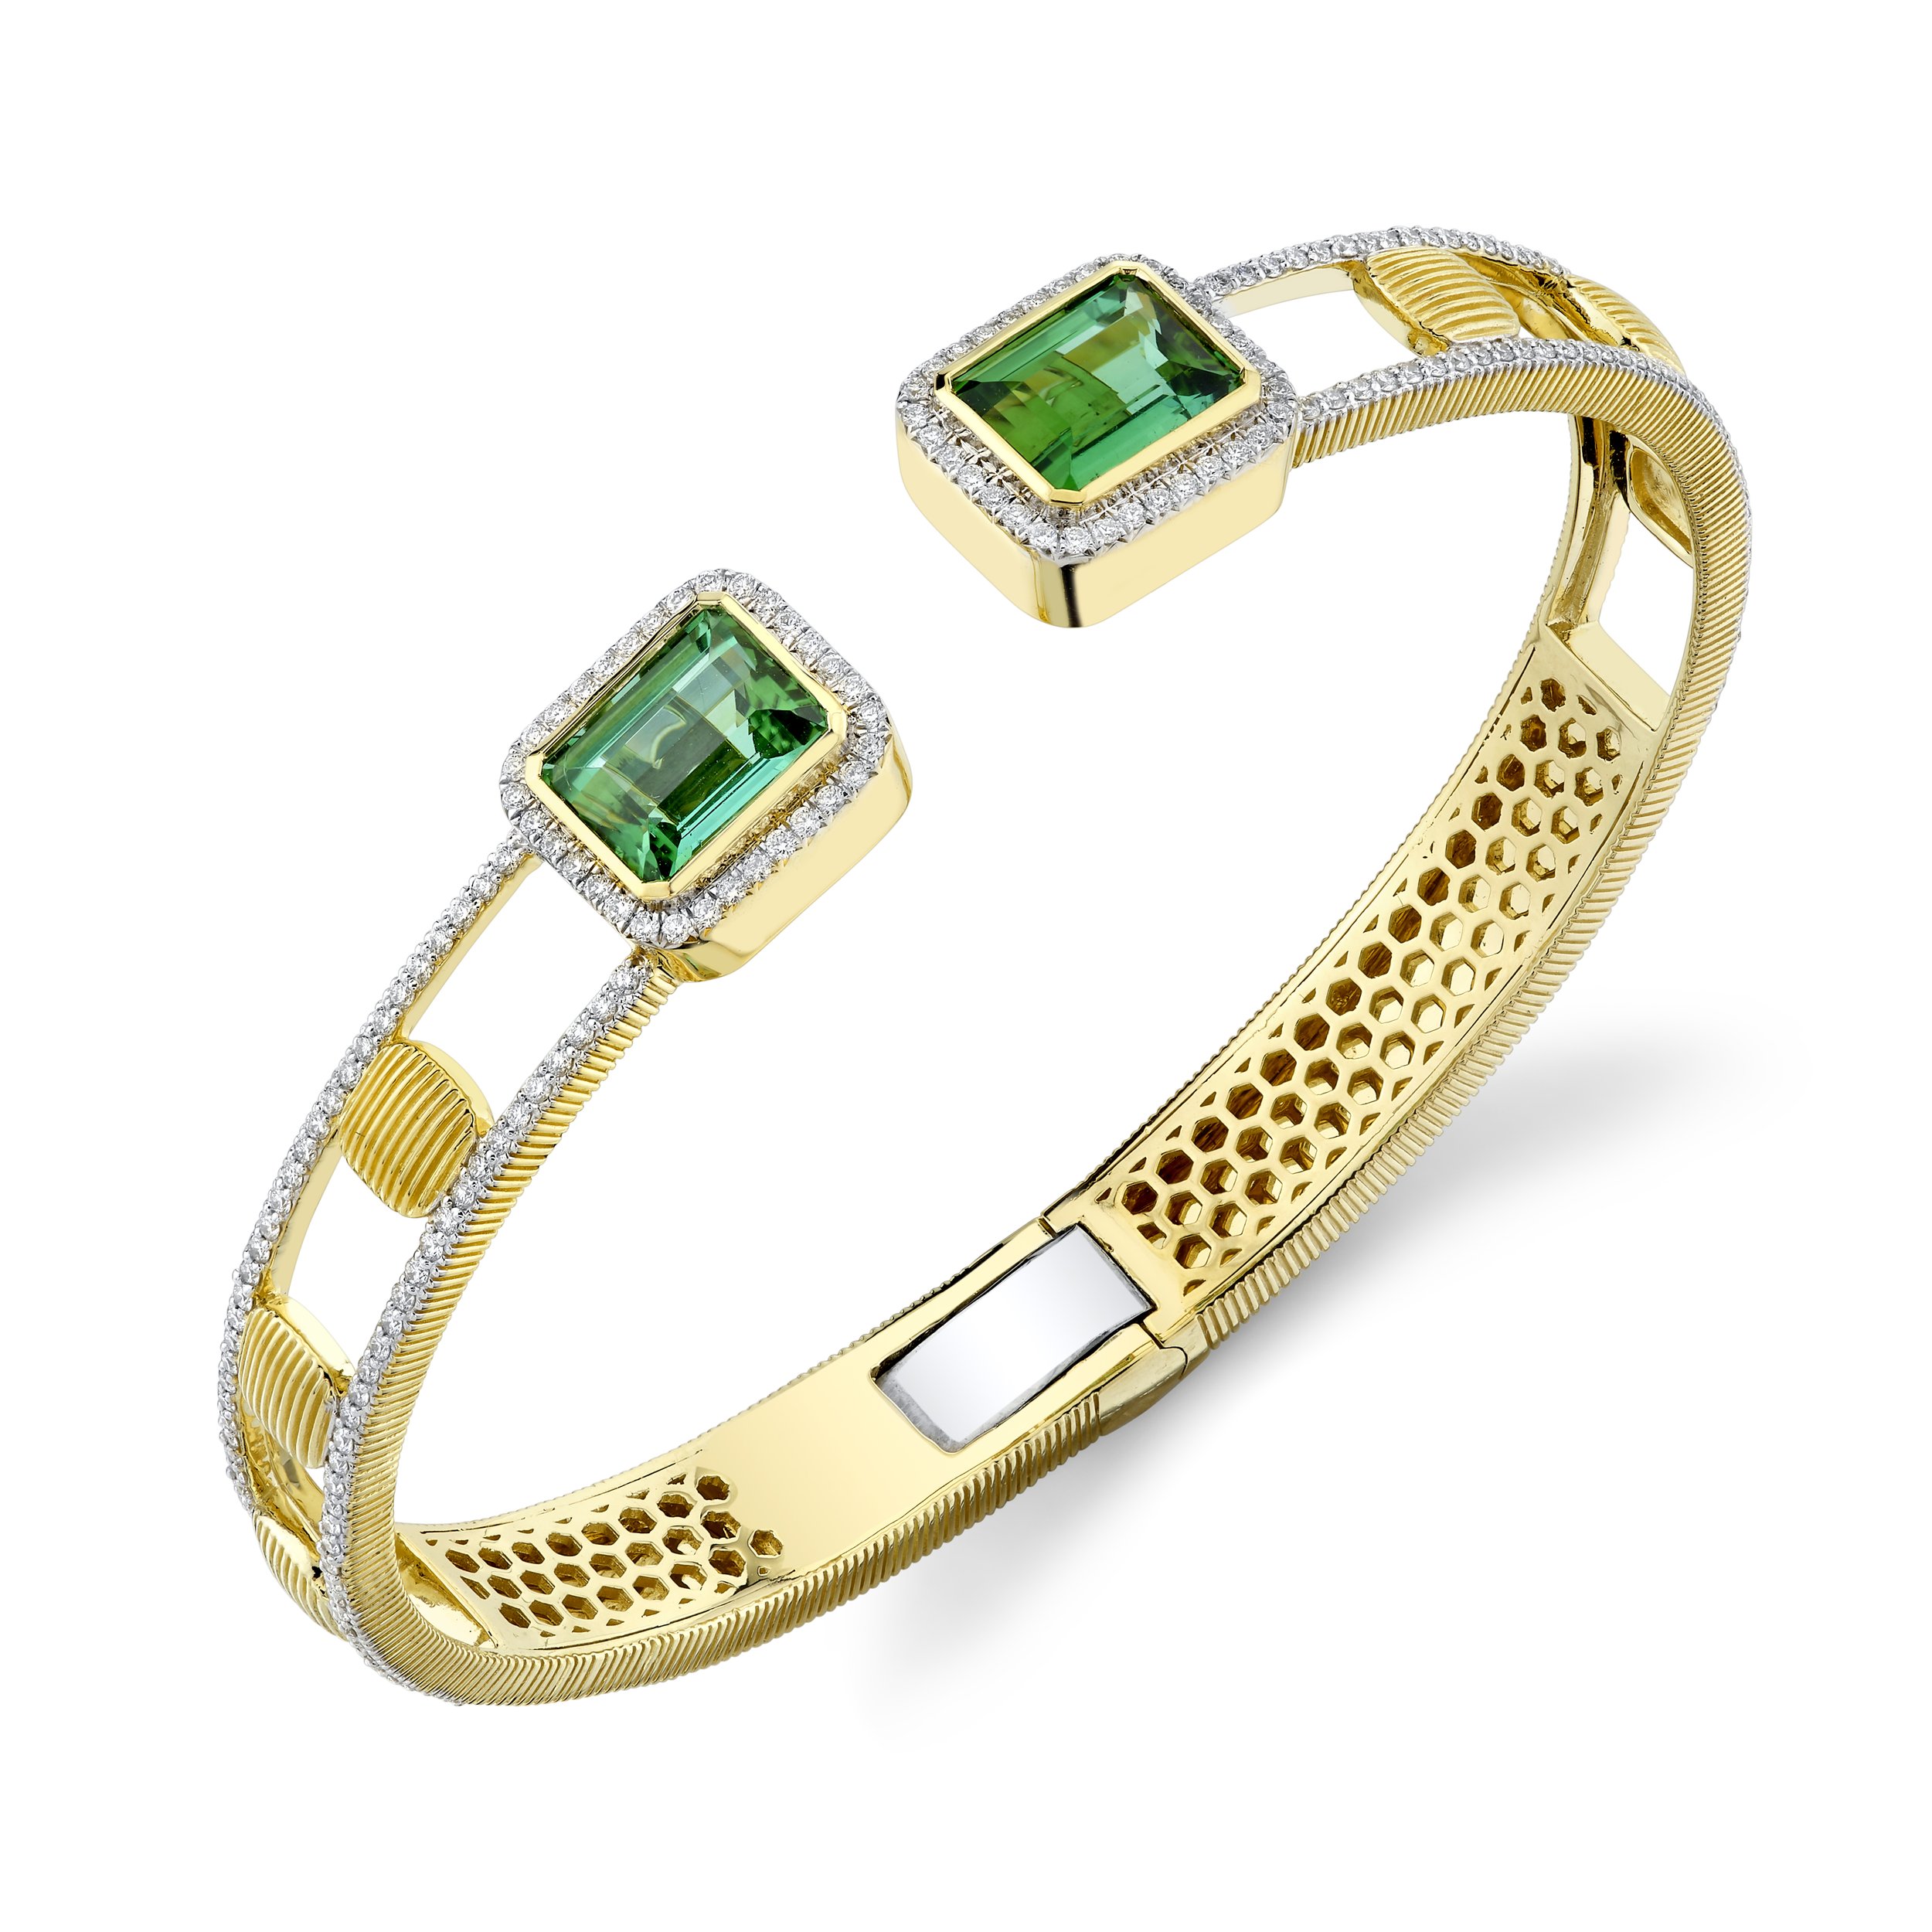 Caviar Series 18k Gold Bracelet with Green Tourmaline and White Diamonds